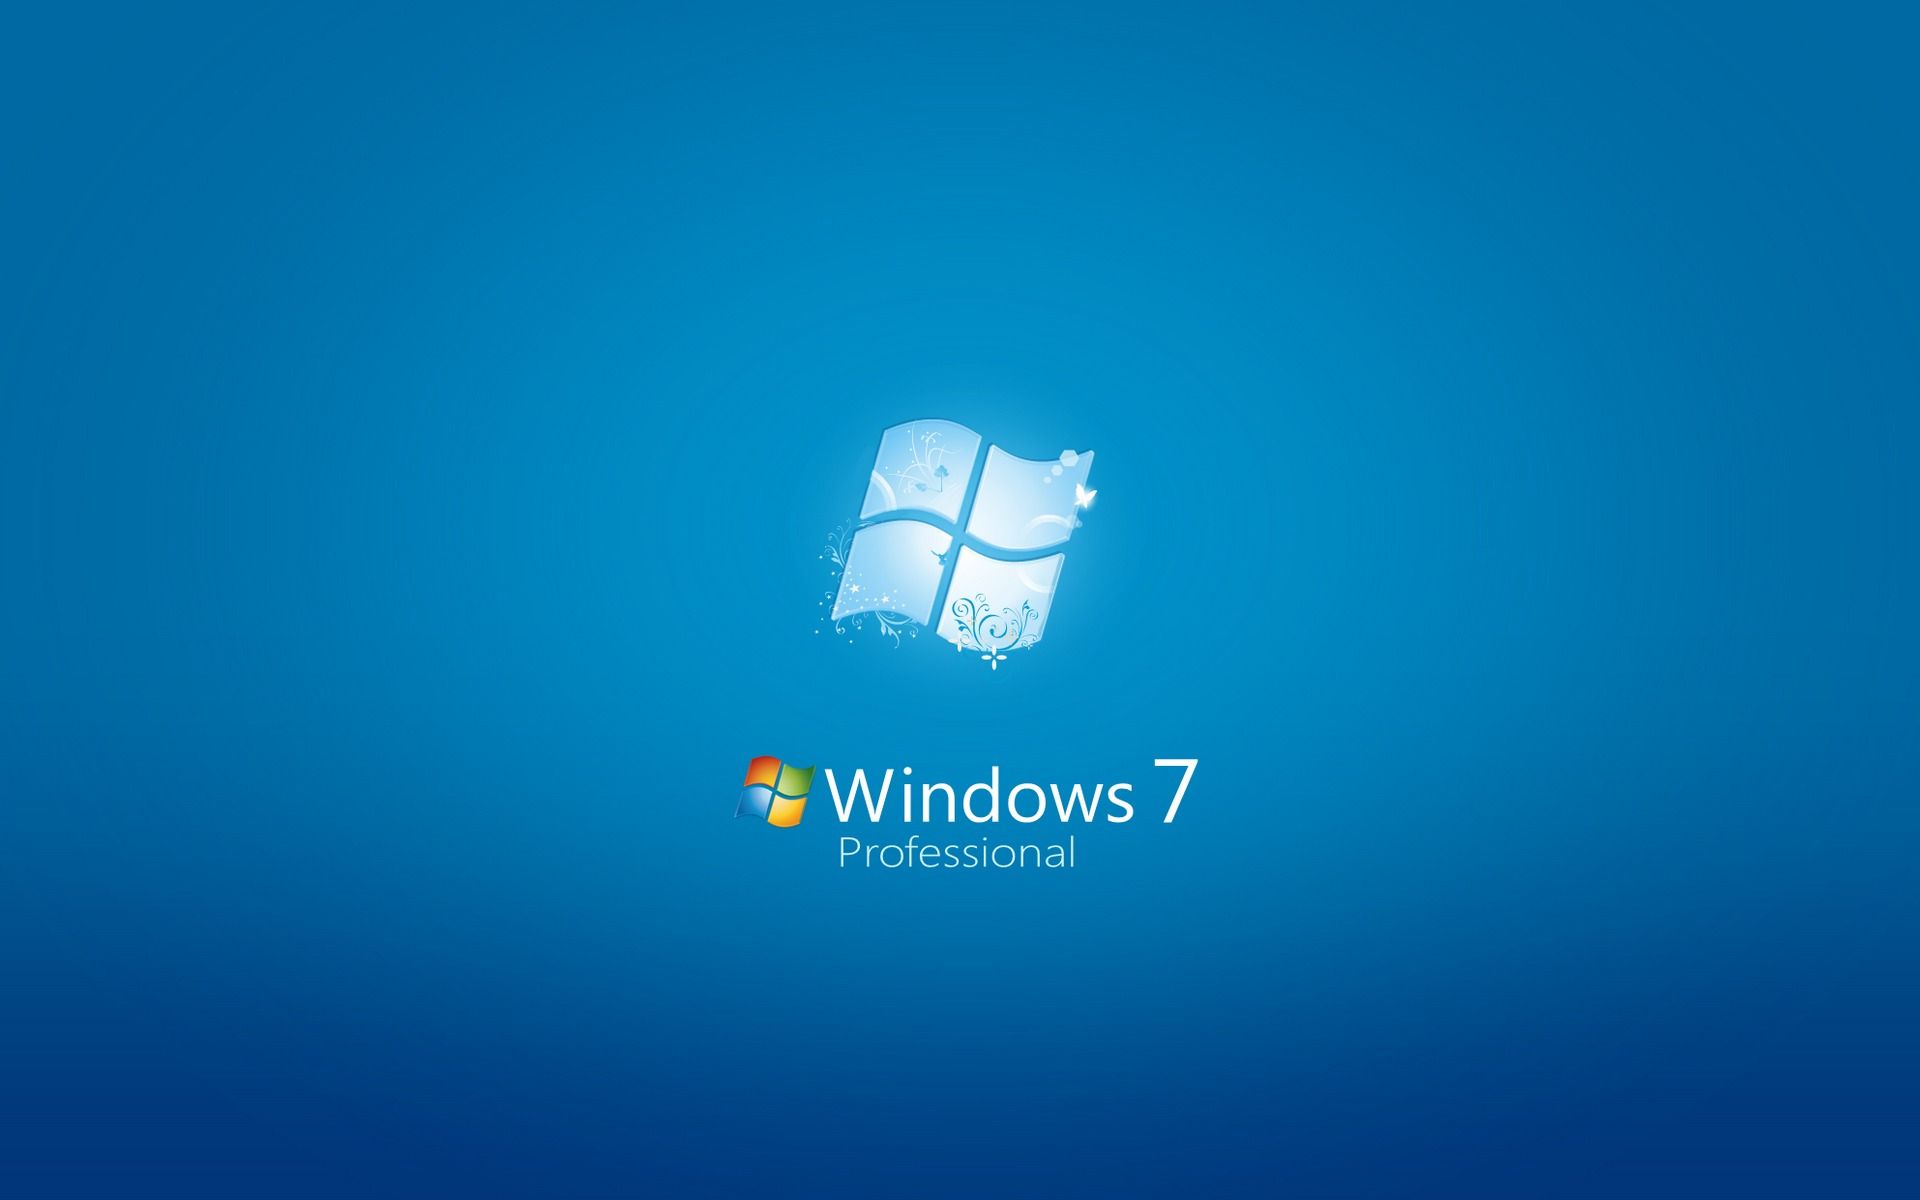 Download Windows 8 1 Wallpaper Hd 1080p For Desktop | Wallpaper ...